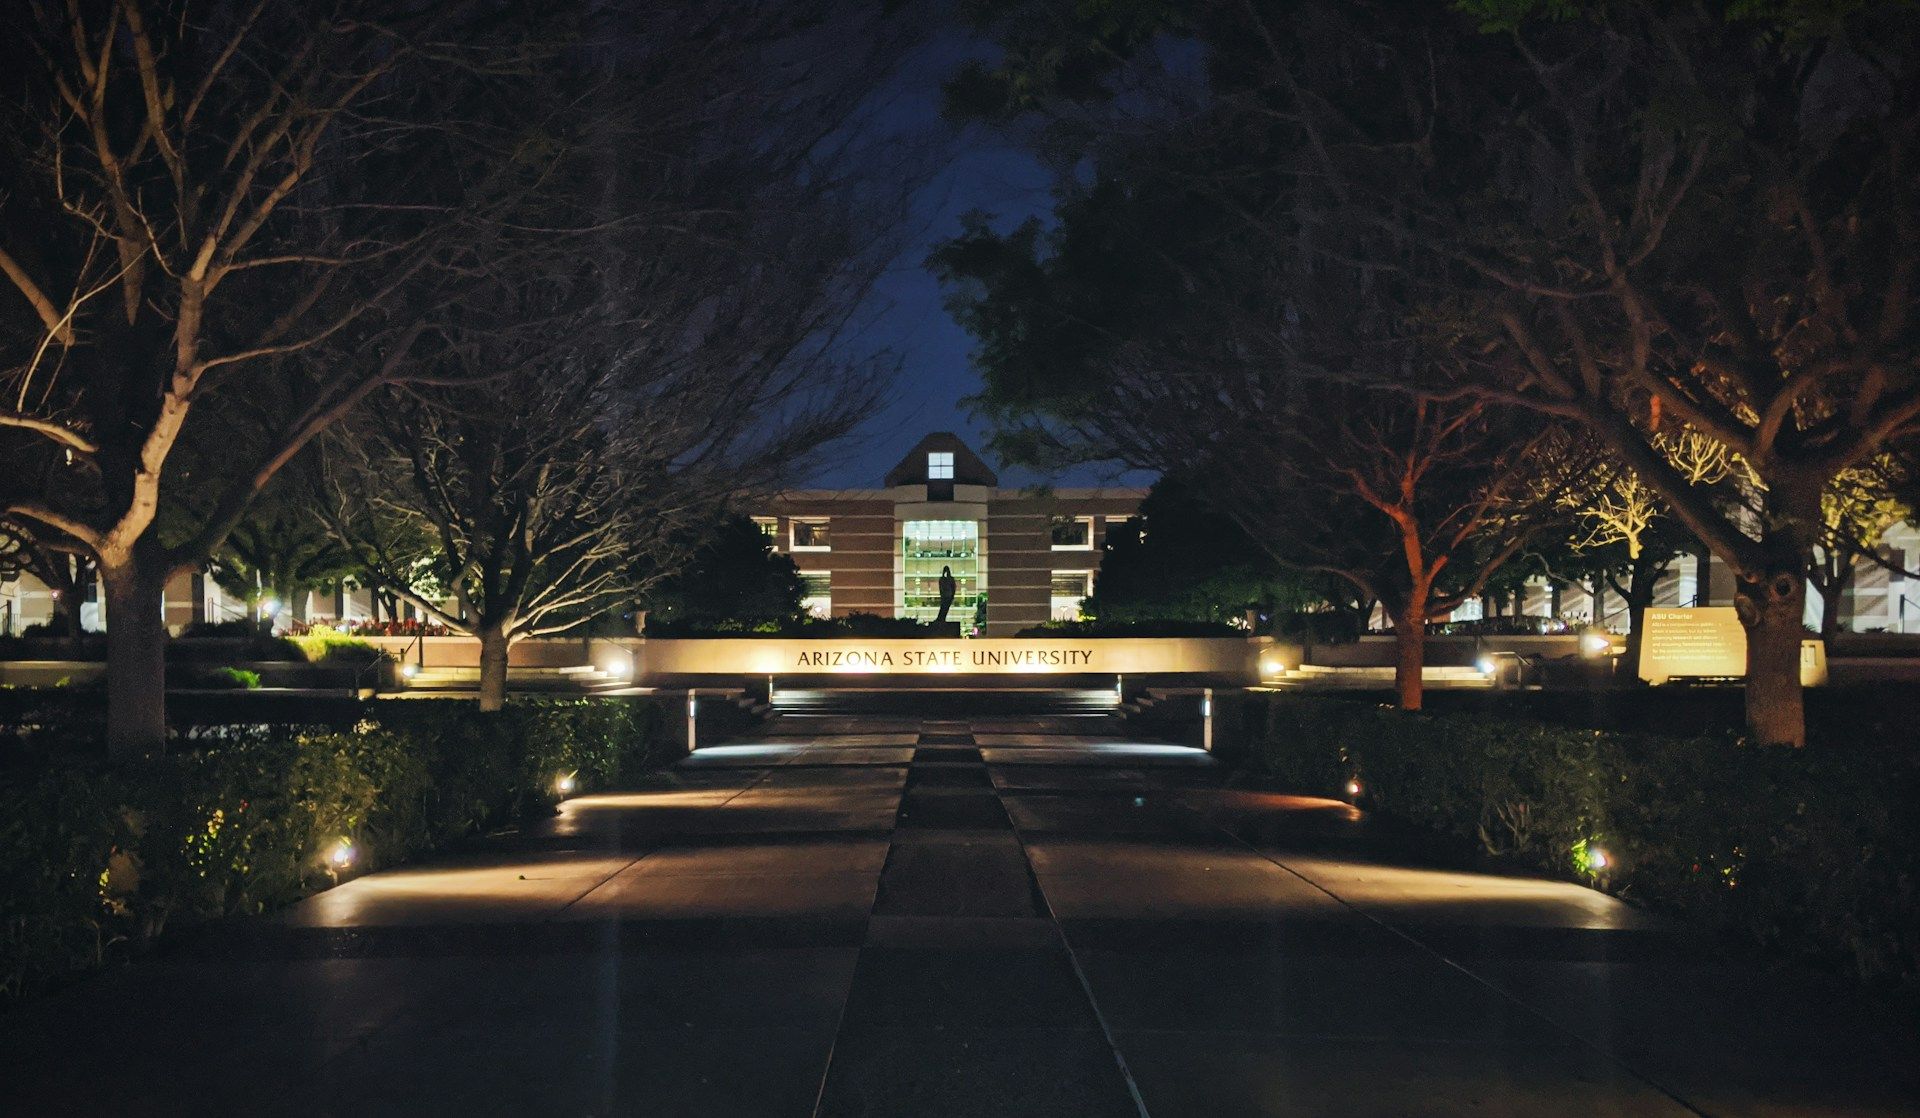  Arizona State University West Campus landmark signage in front of Fletcher Library at dusk.